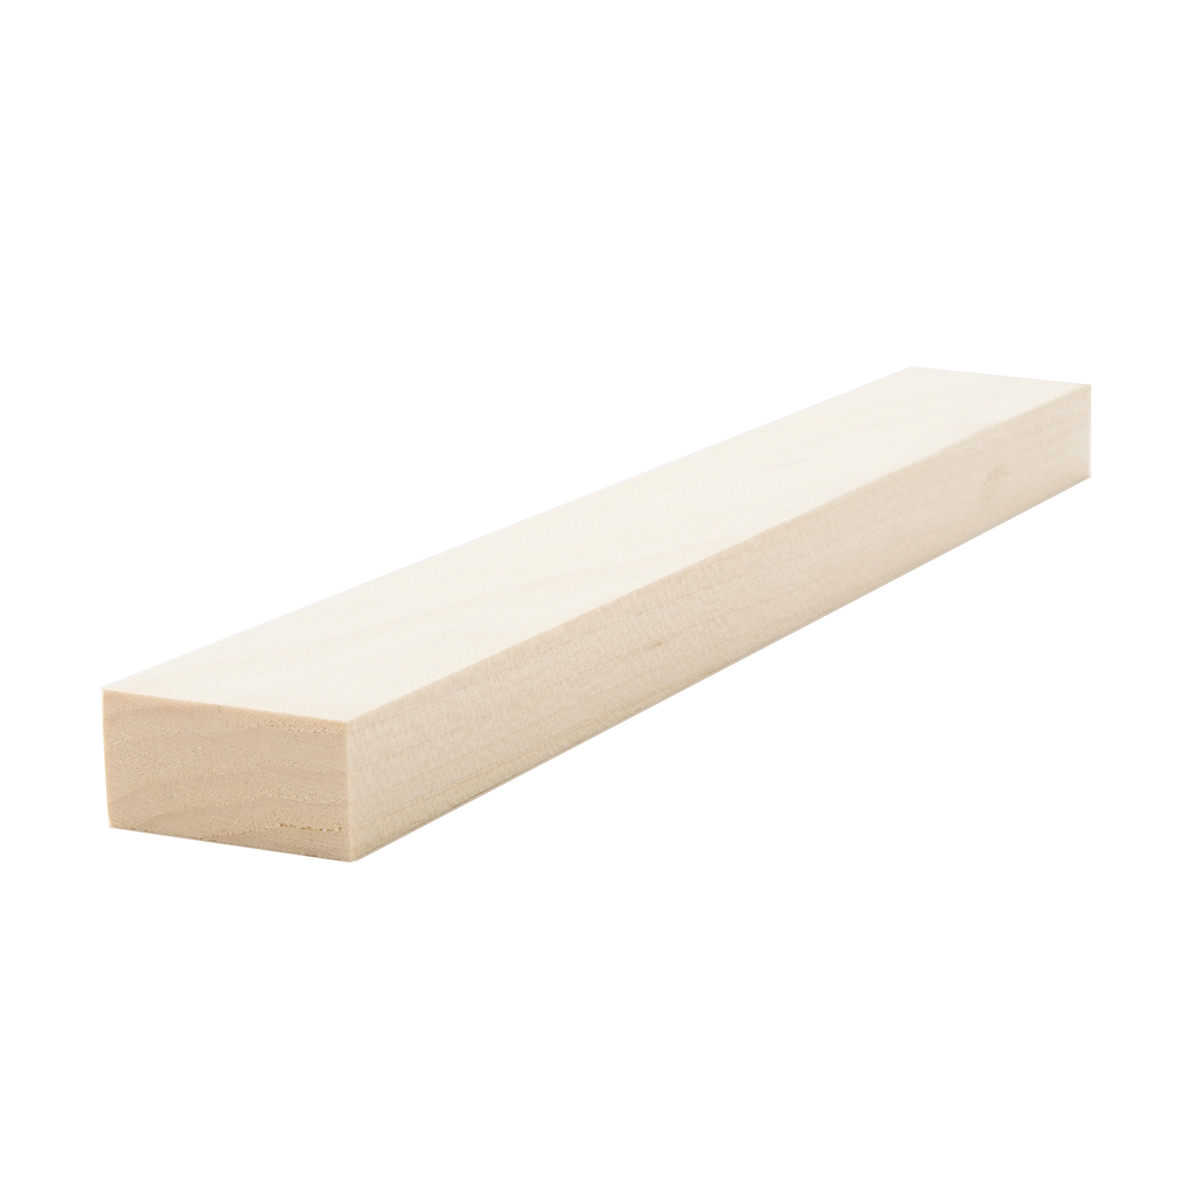 Poplar Dimensional Lumber